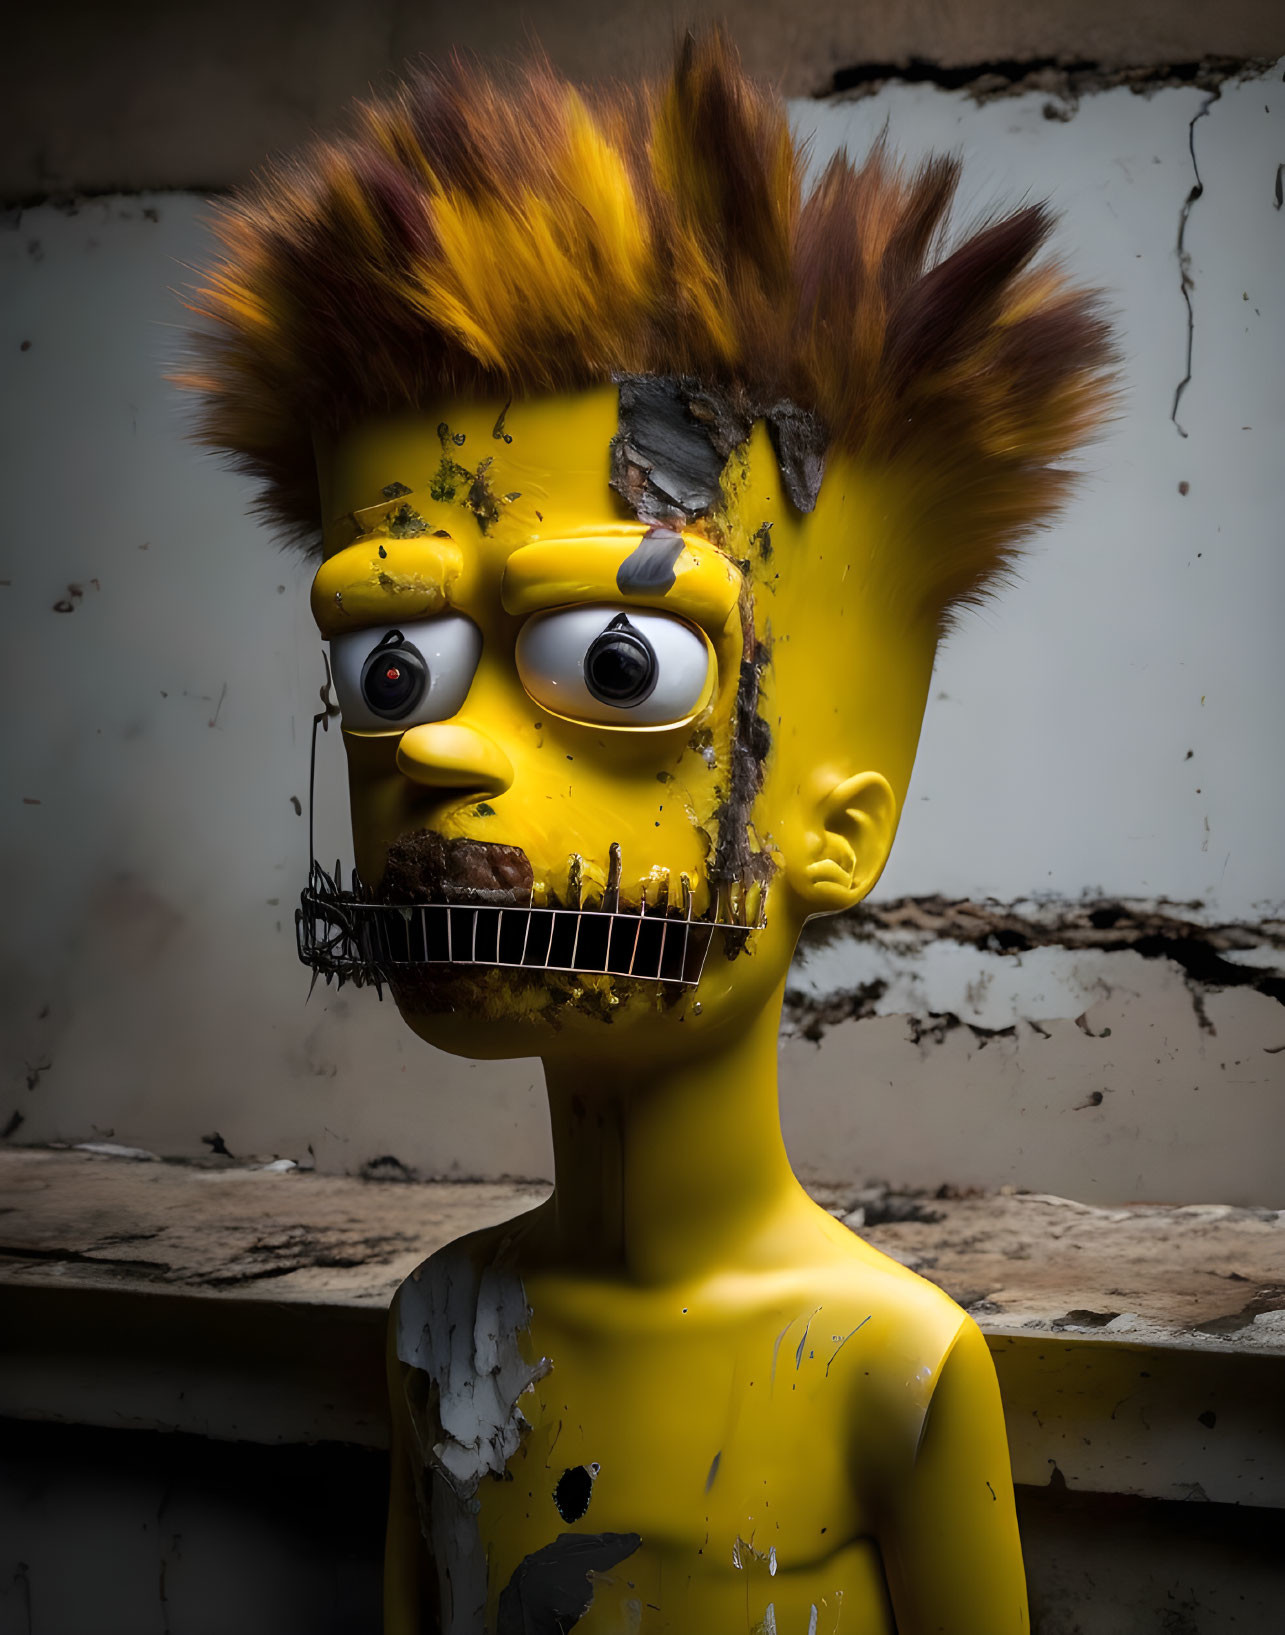 Worn Bart Simpson-like figurine against grungy wall